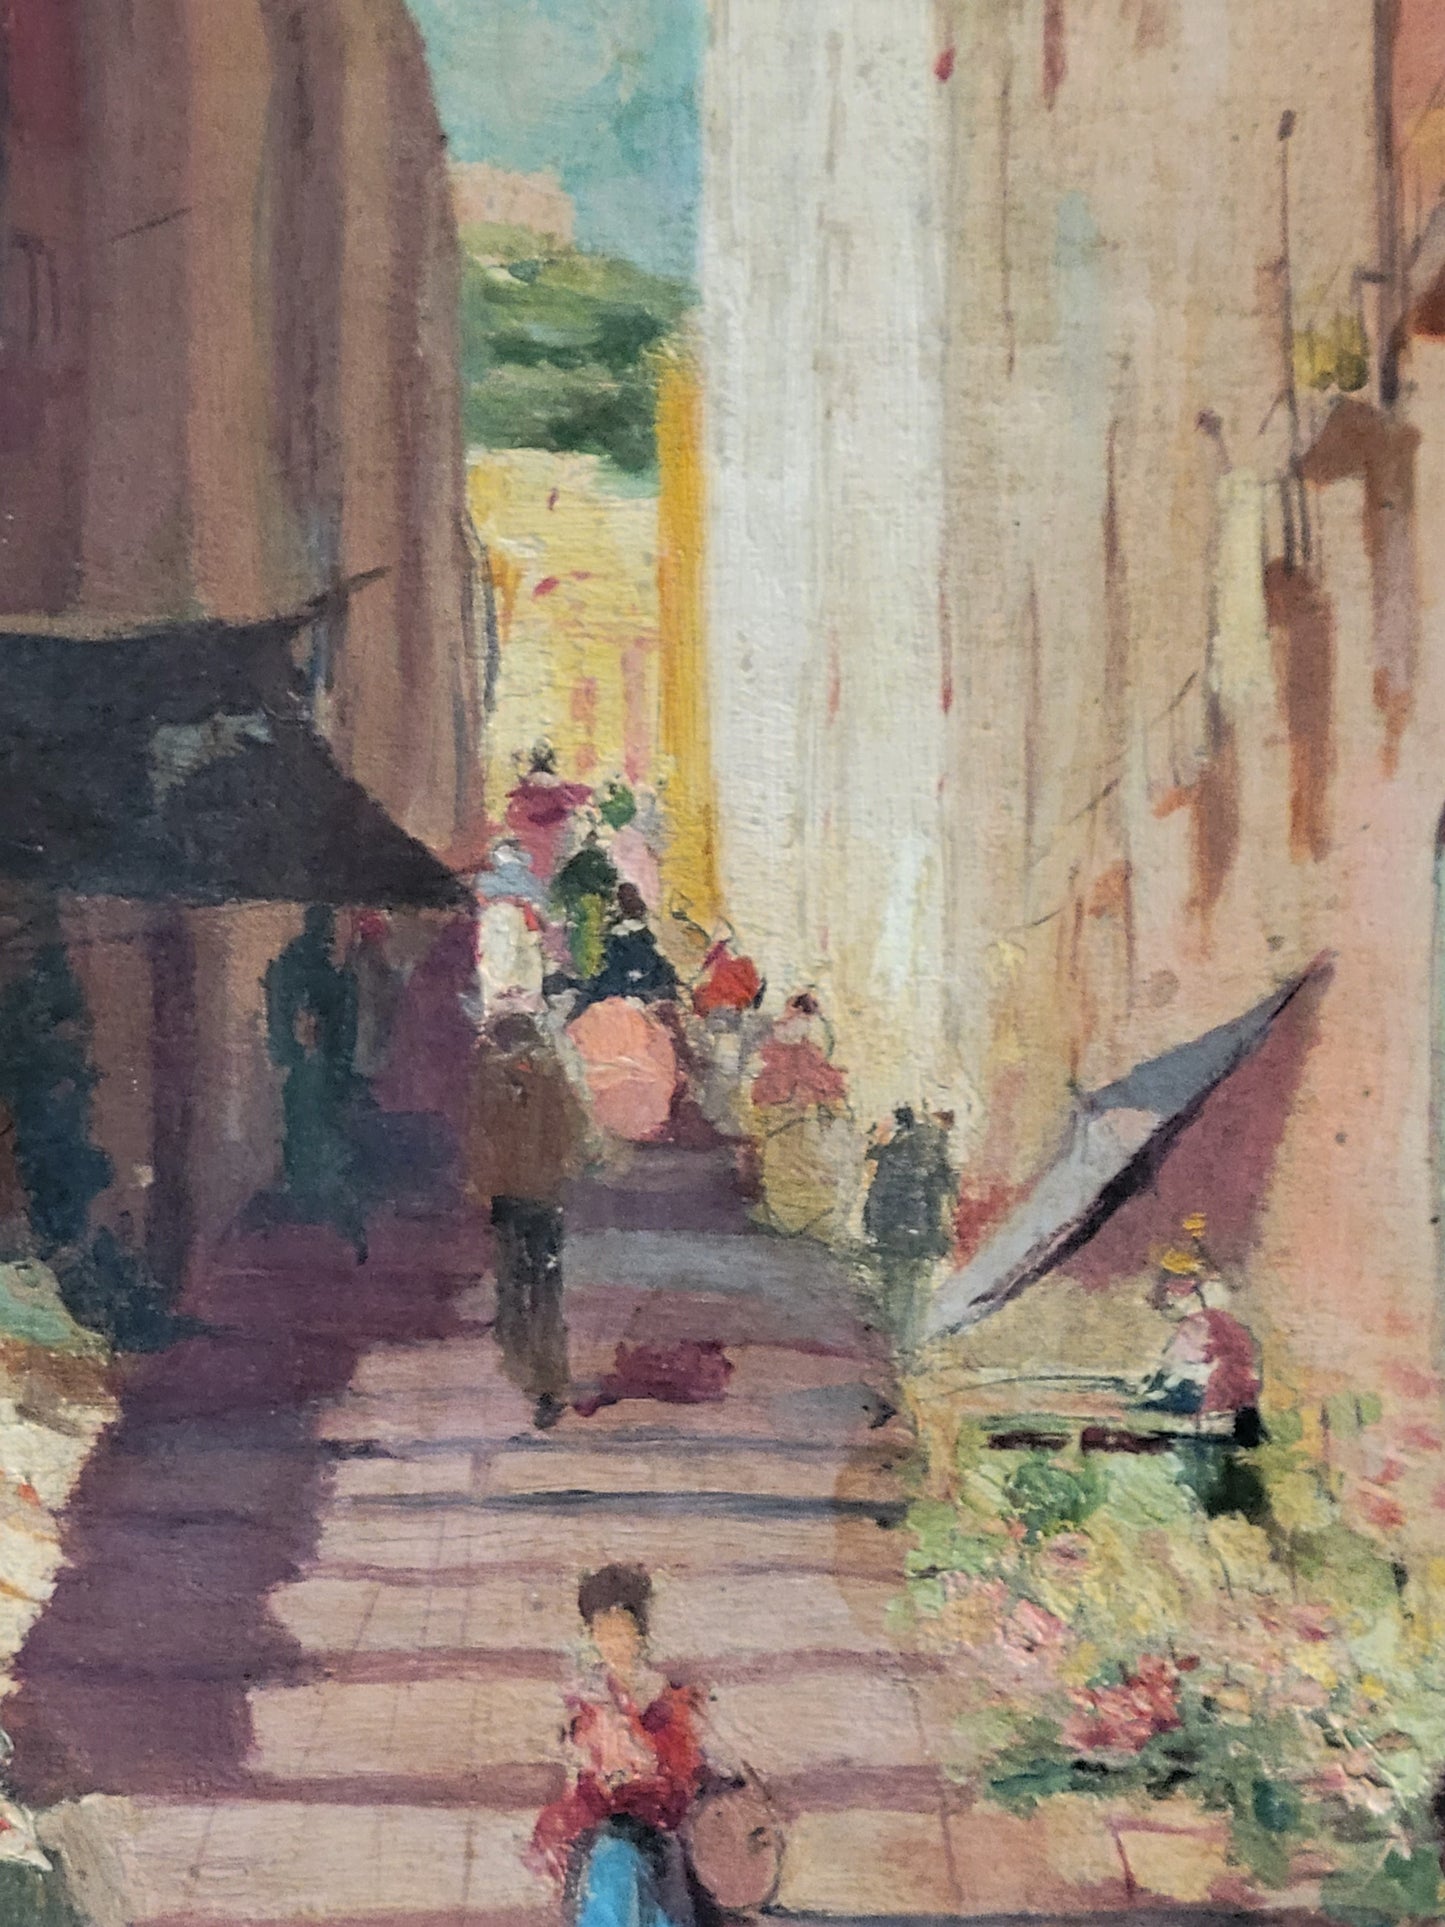 Vintage Italian Street Market Scene - Oil on Canvas Framed Painting